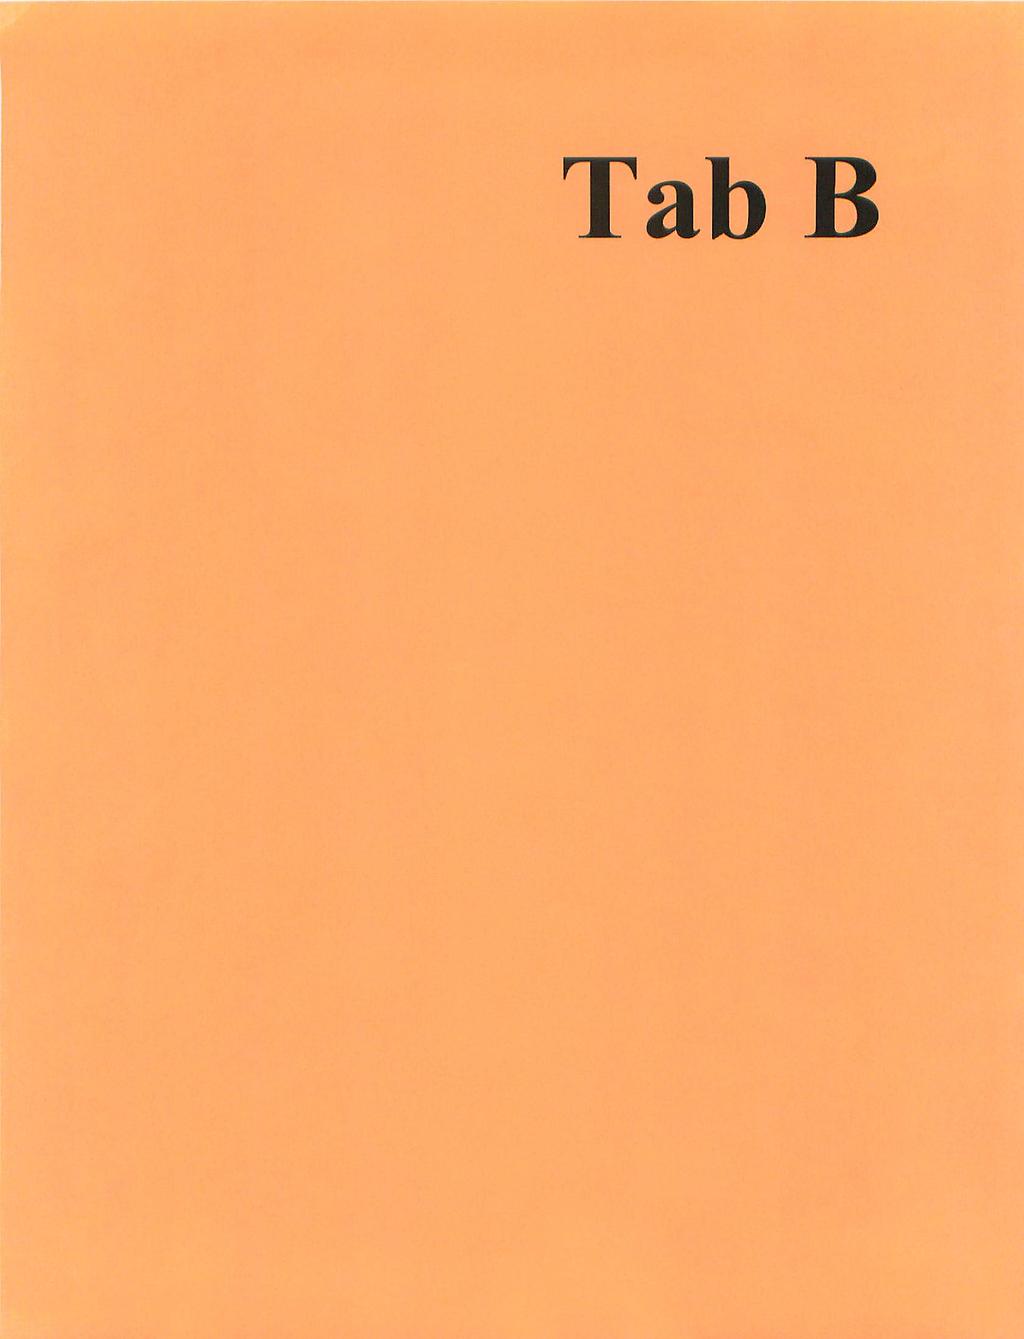 TabB